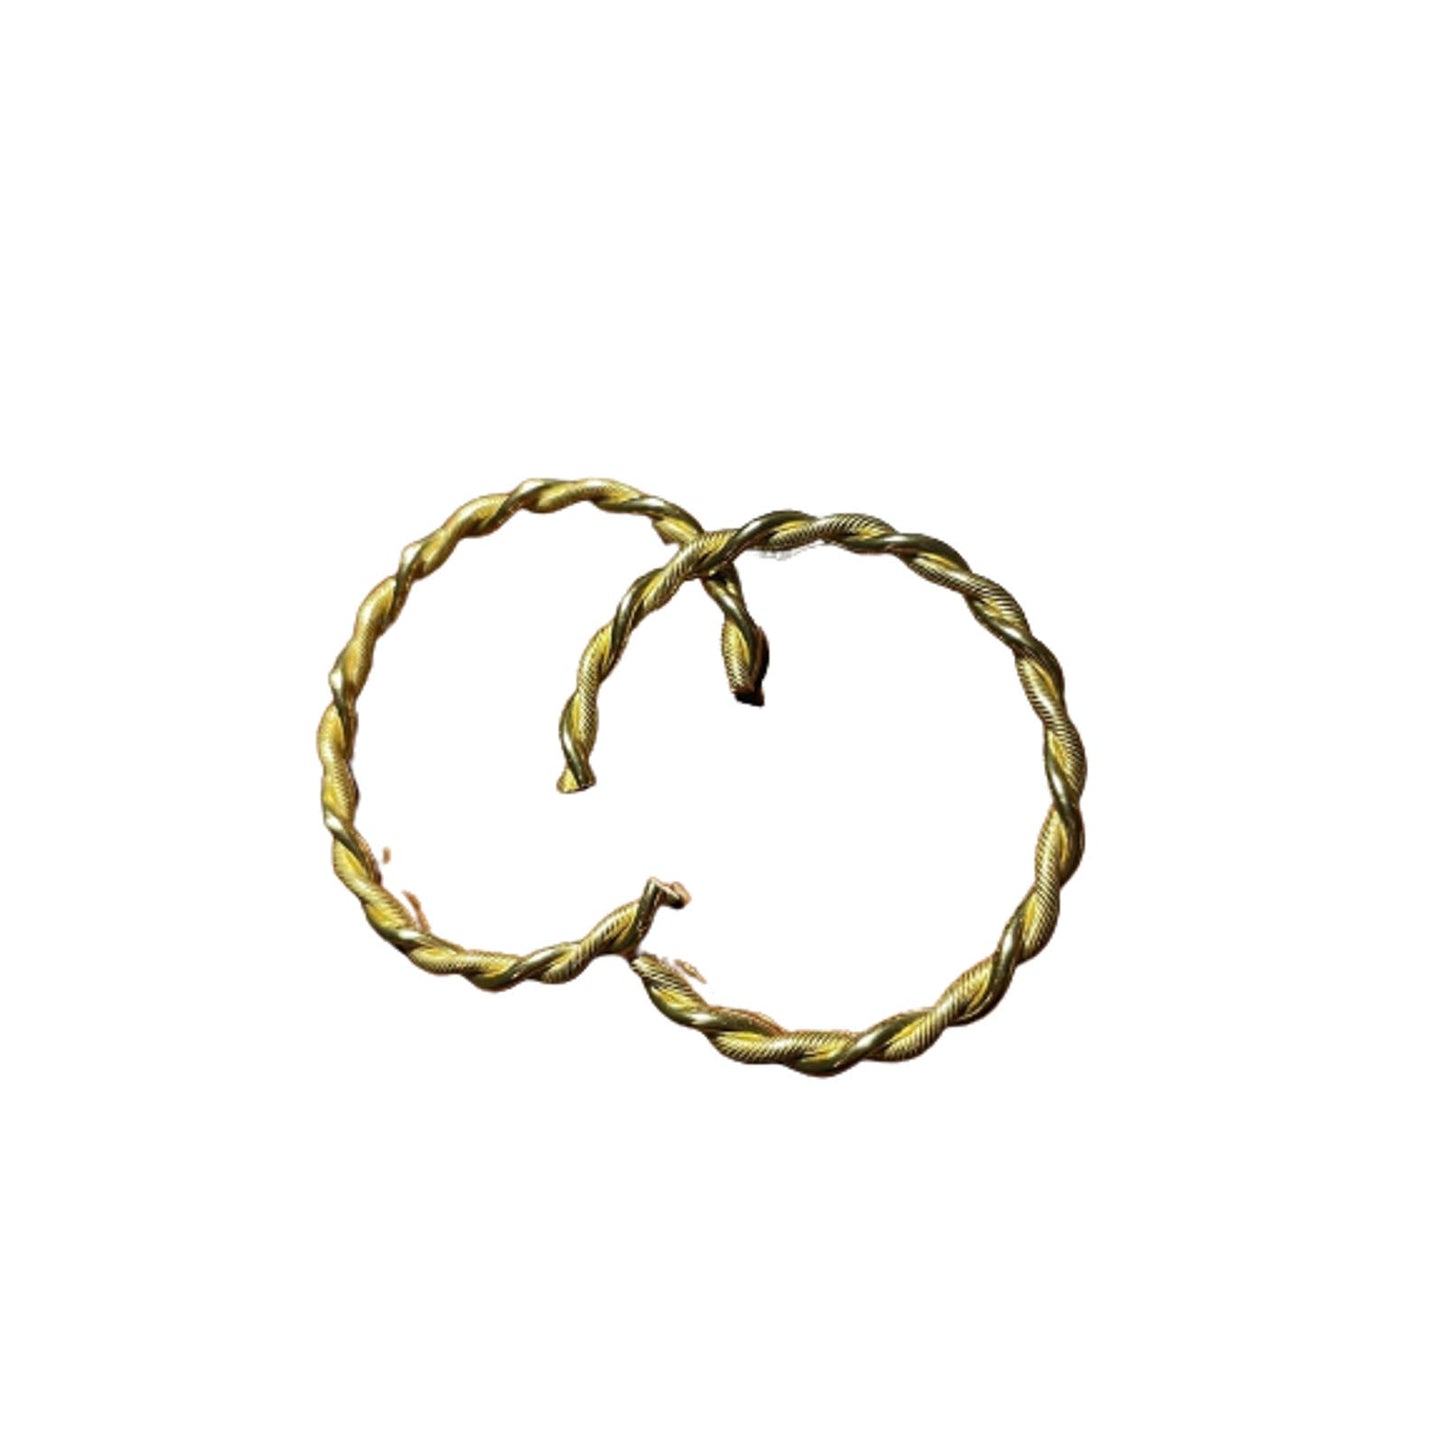 Women's Gold Rope-Design Cuff Bracelets (Set of 2)